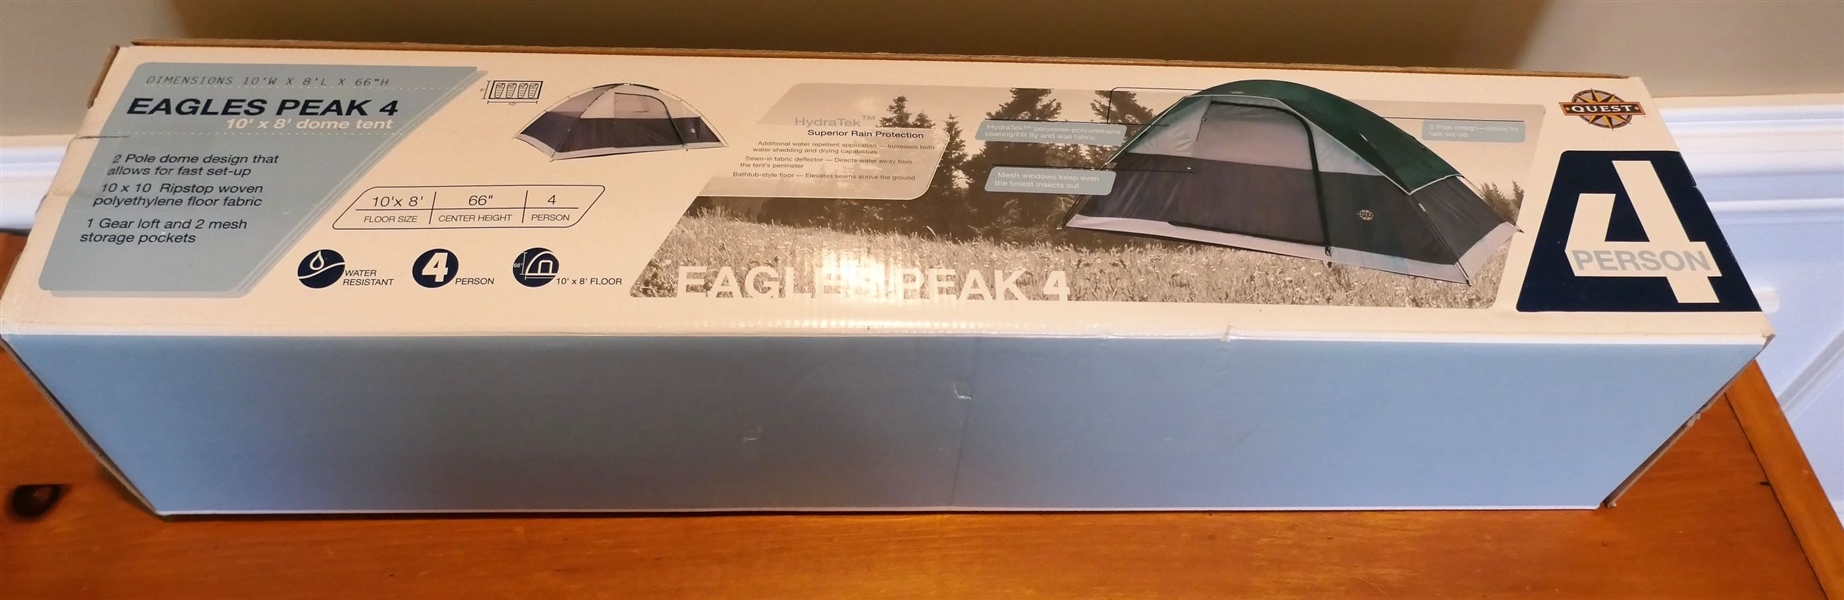 Quest "Eagles Peak 4" 10 by 8 Dome Tent - In Original Box